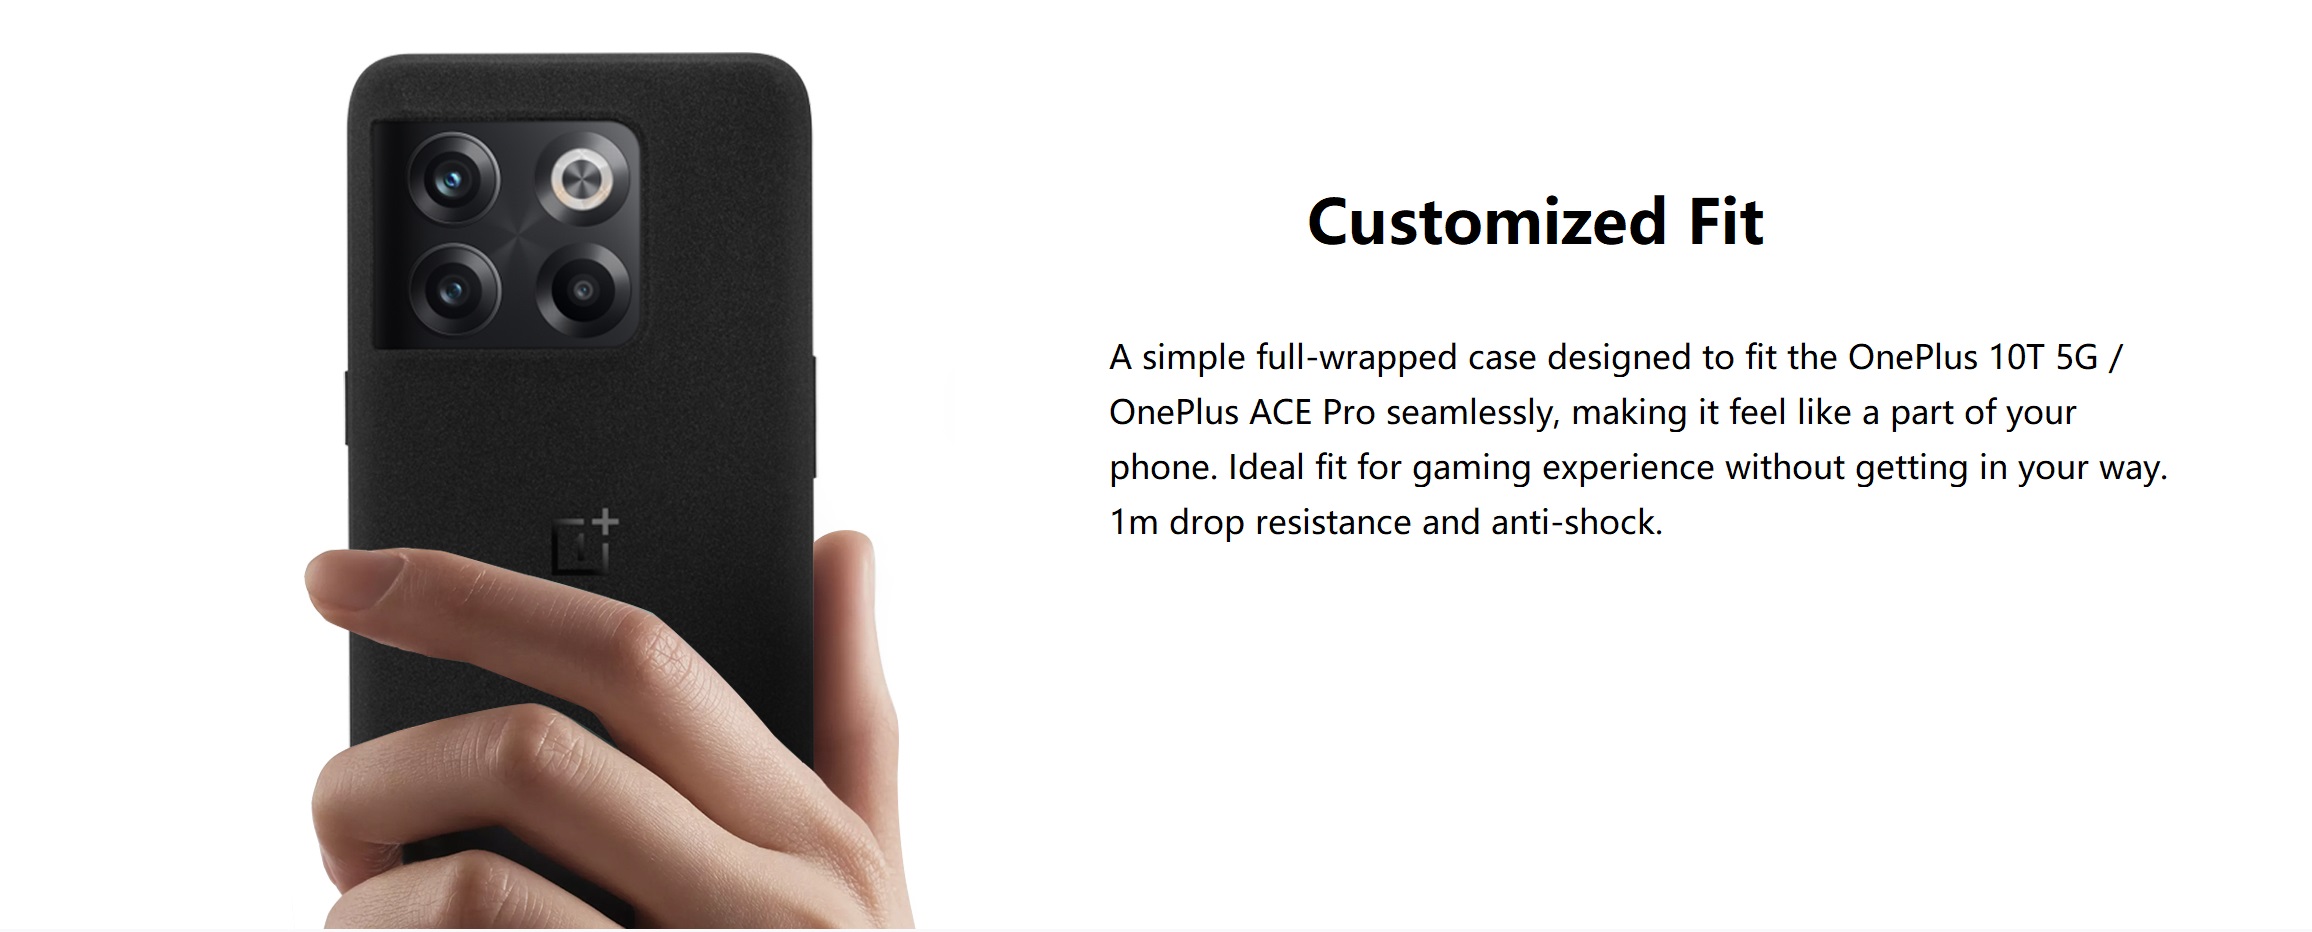 OnePlus ACE Pro Bumper Case